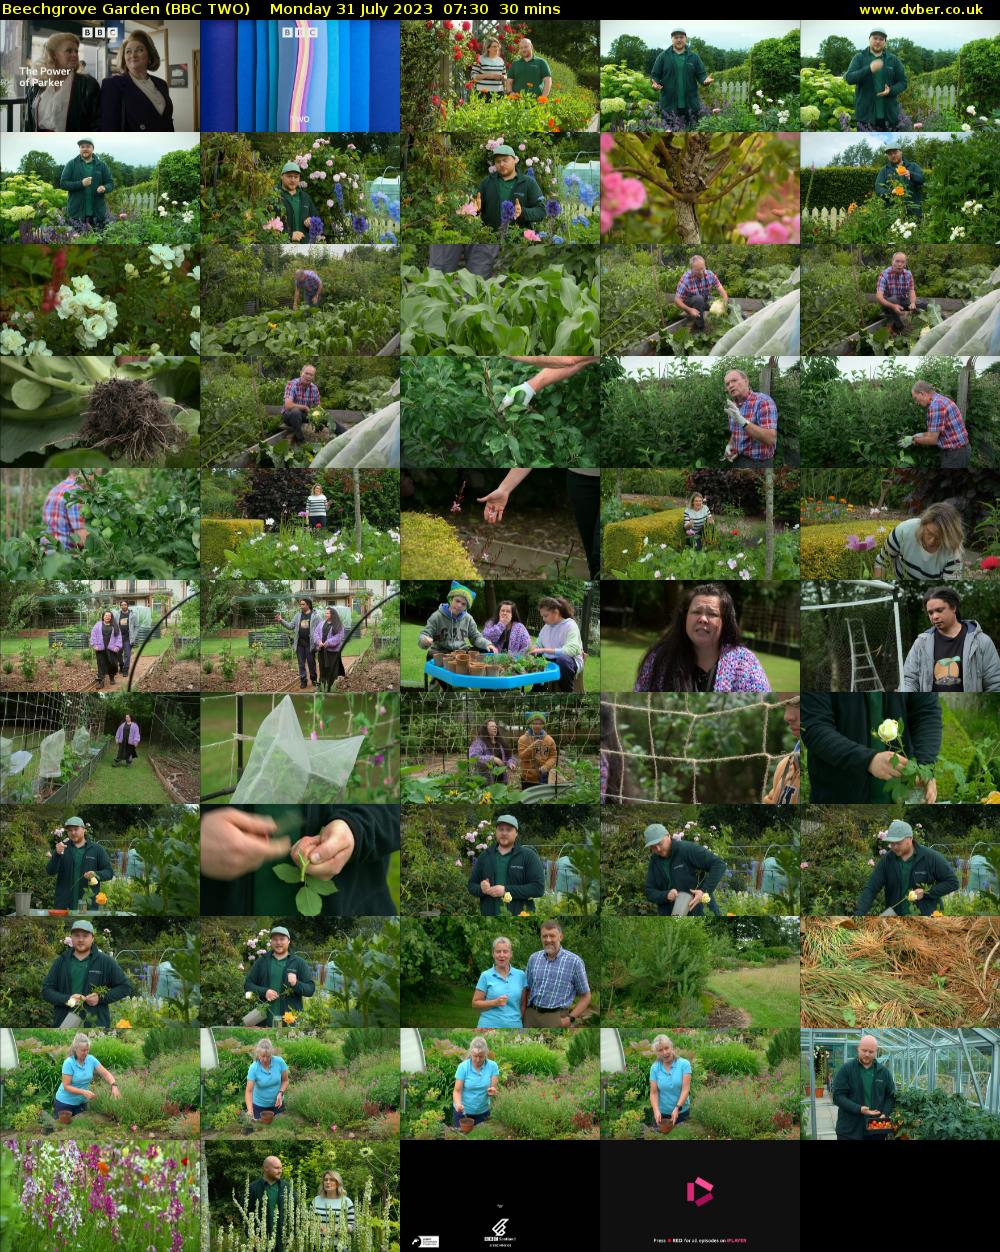 Beechgrove Garden (BBC TWO) Monday 31 July 2023 07:30 - 08:00